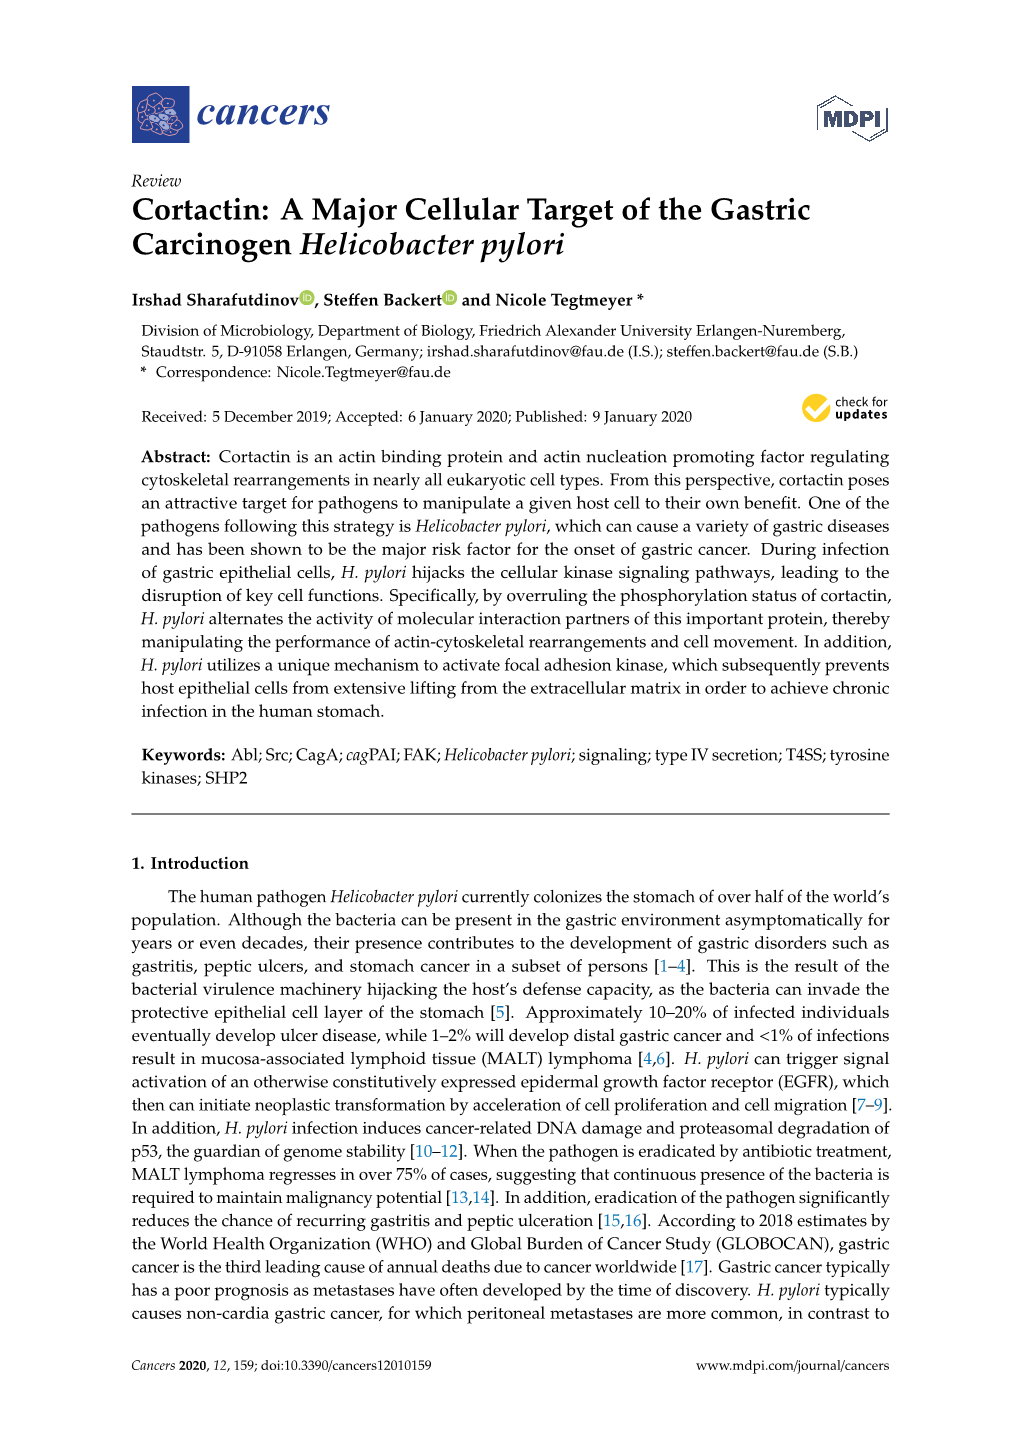 Cortactin: a Major Cellular Target of the Gastric Carcinogen Helicobacter Pylori